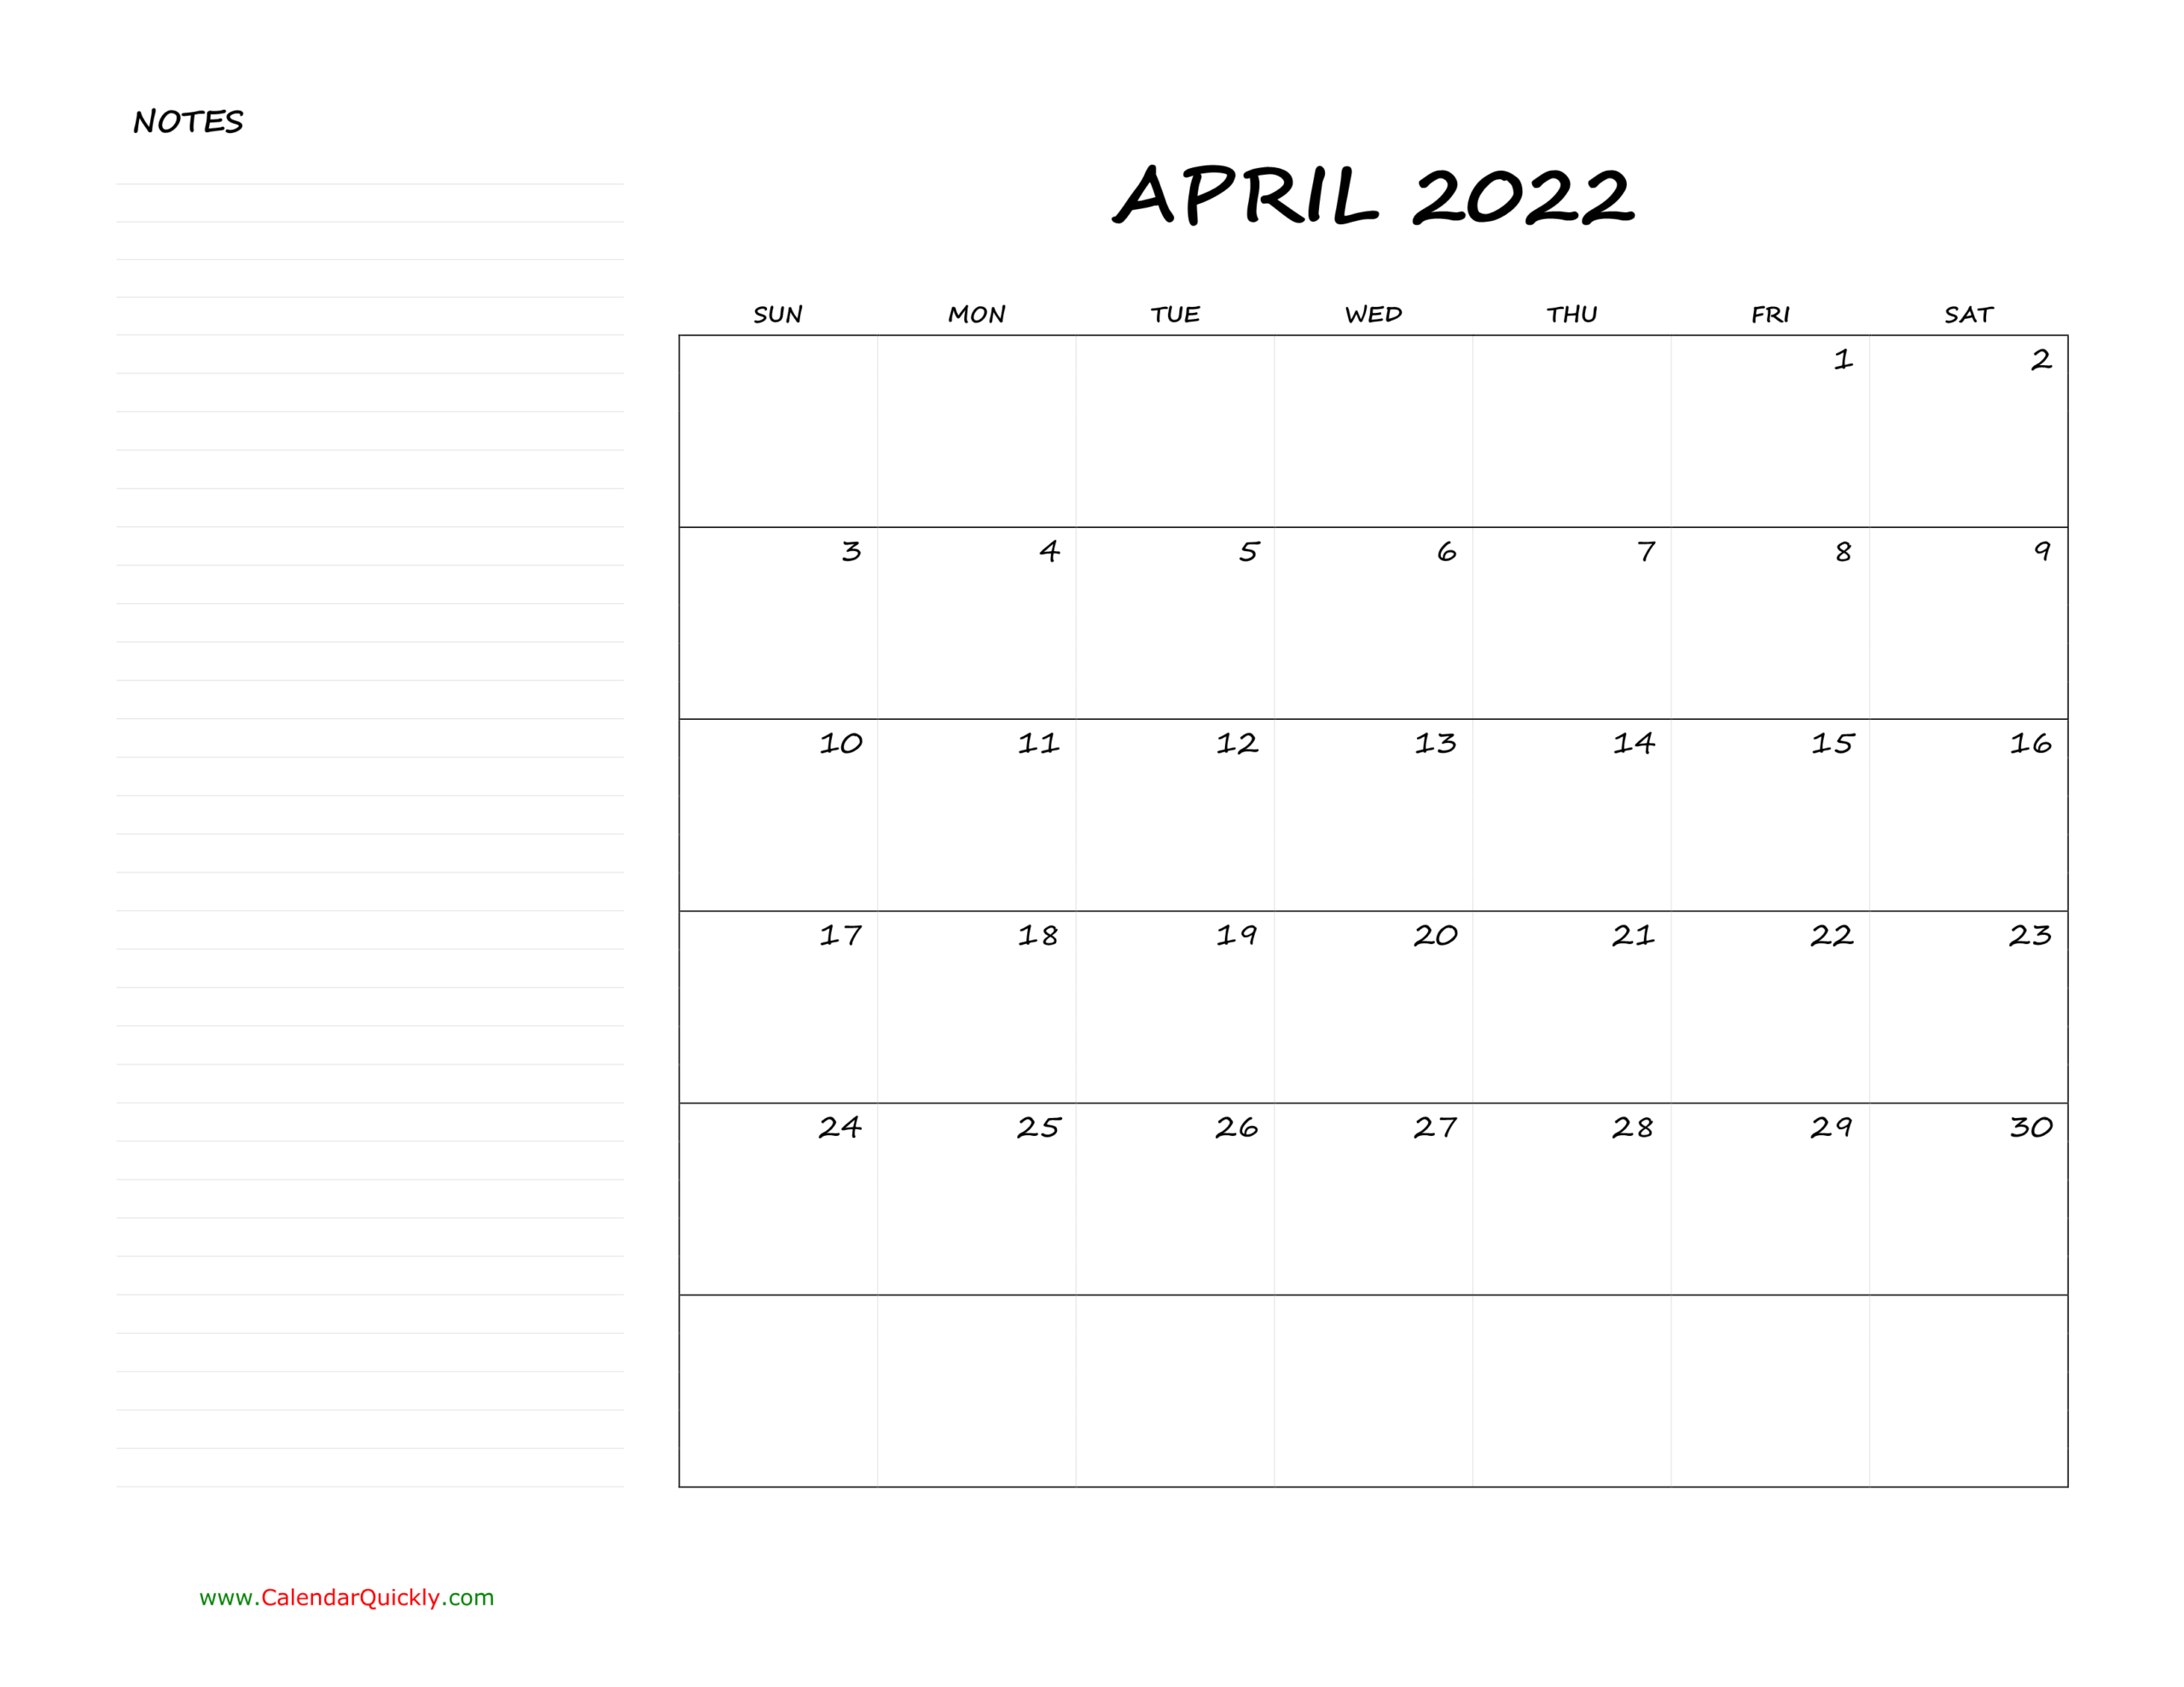 April Blank Calendar 2022 With Notes | Calendar Quickly